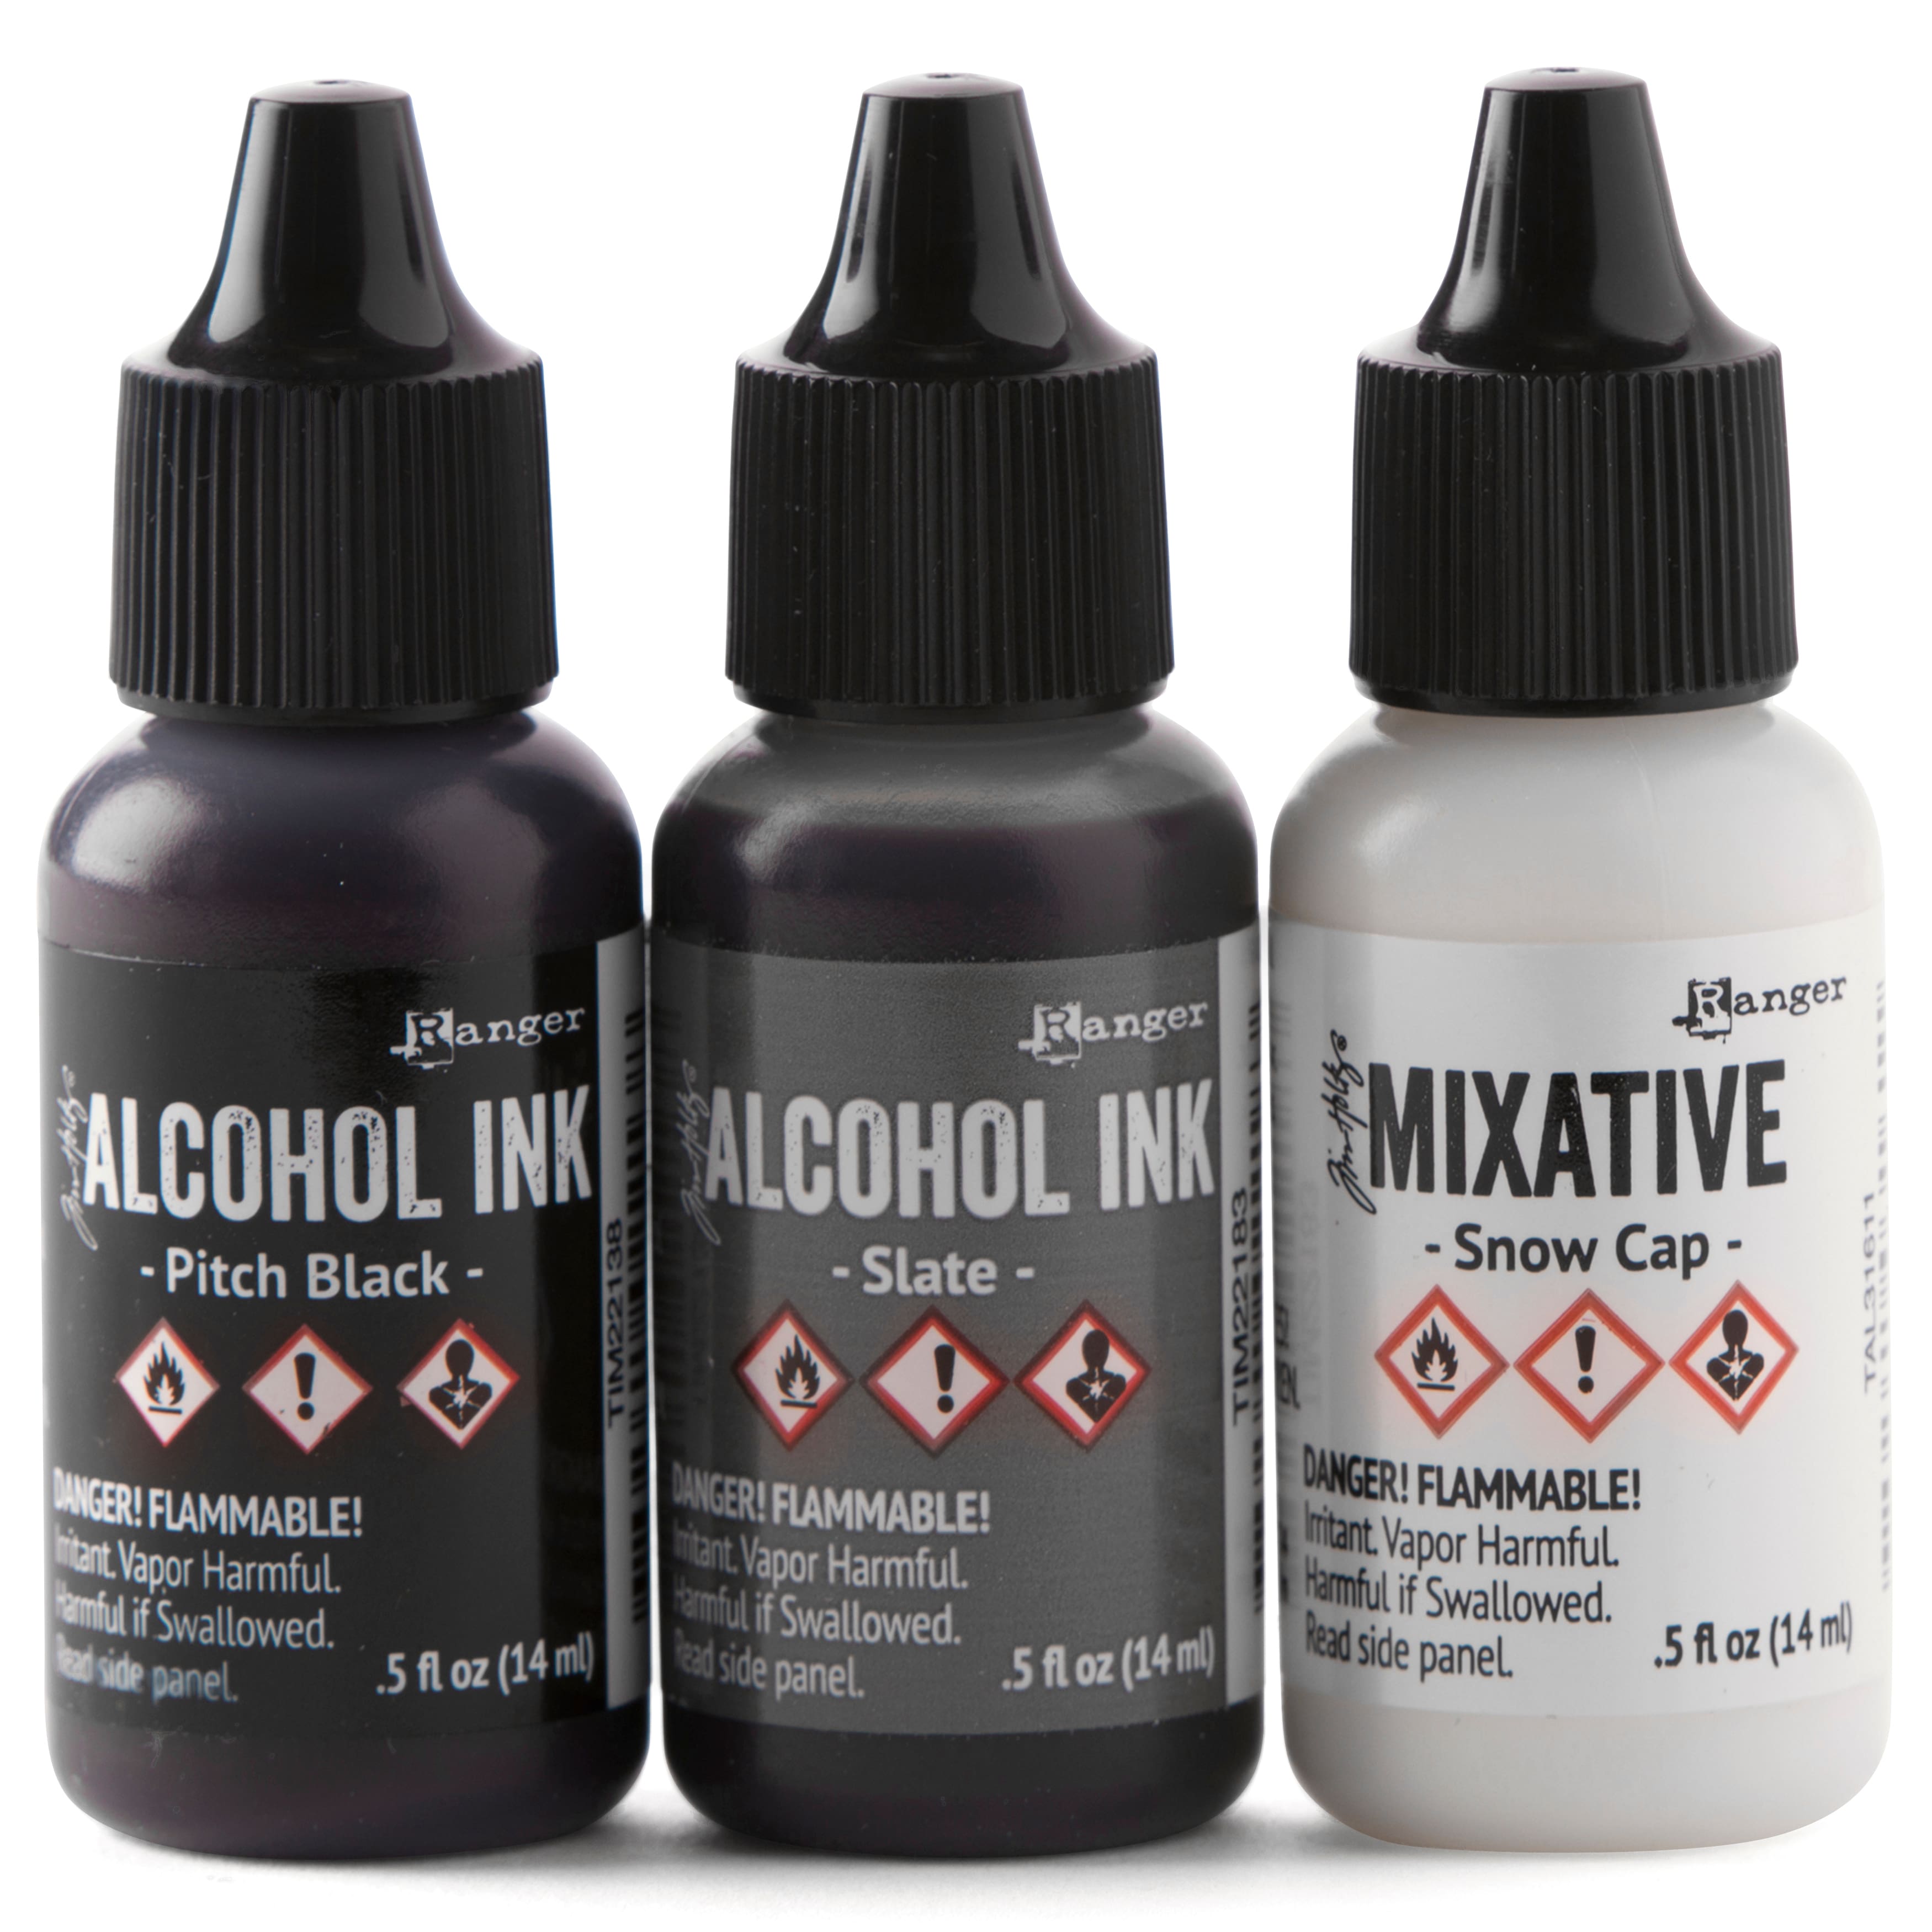 Alcohol Ink Mixative - Snowcap